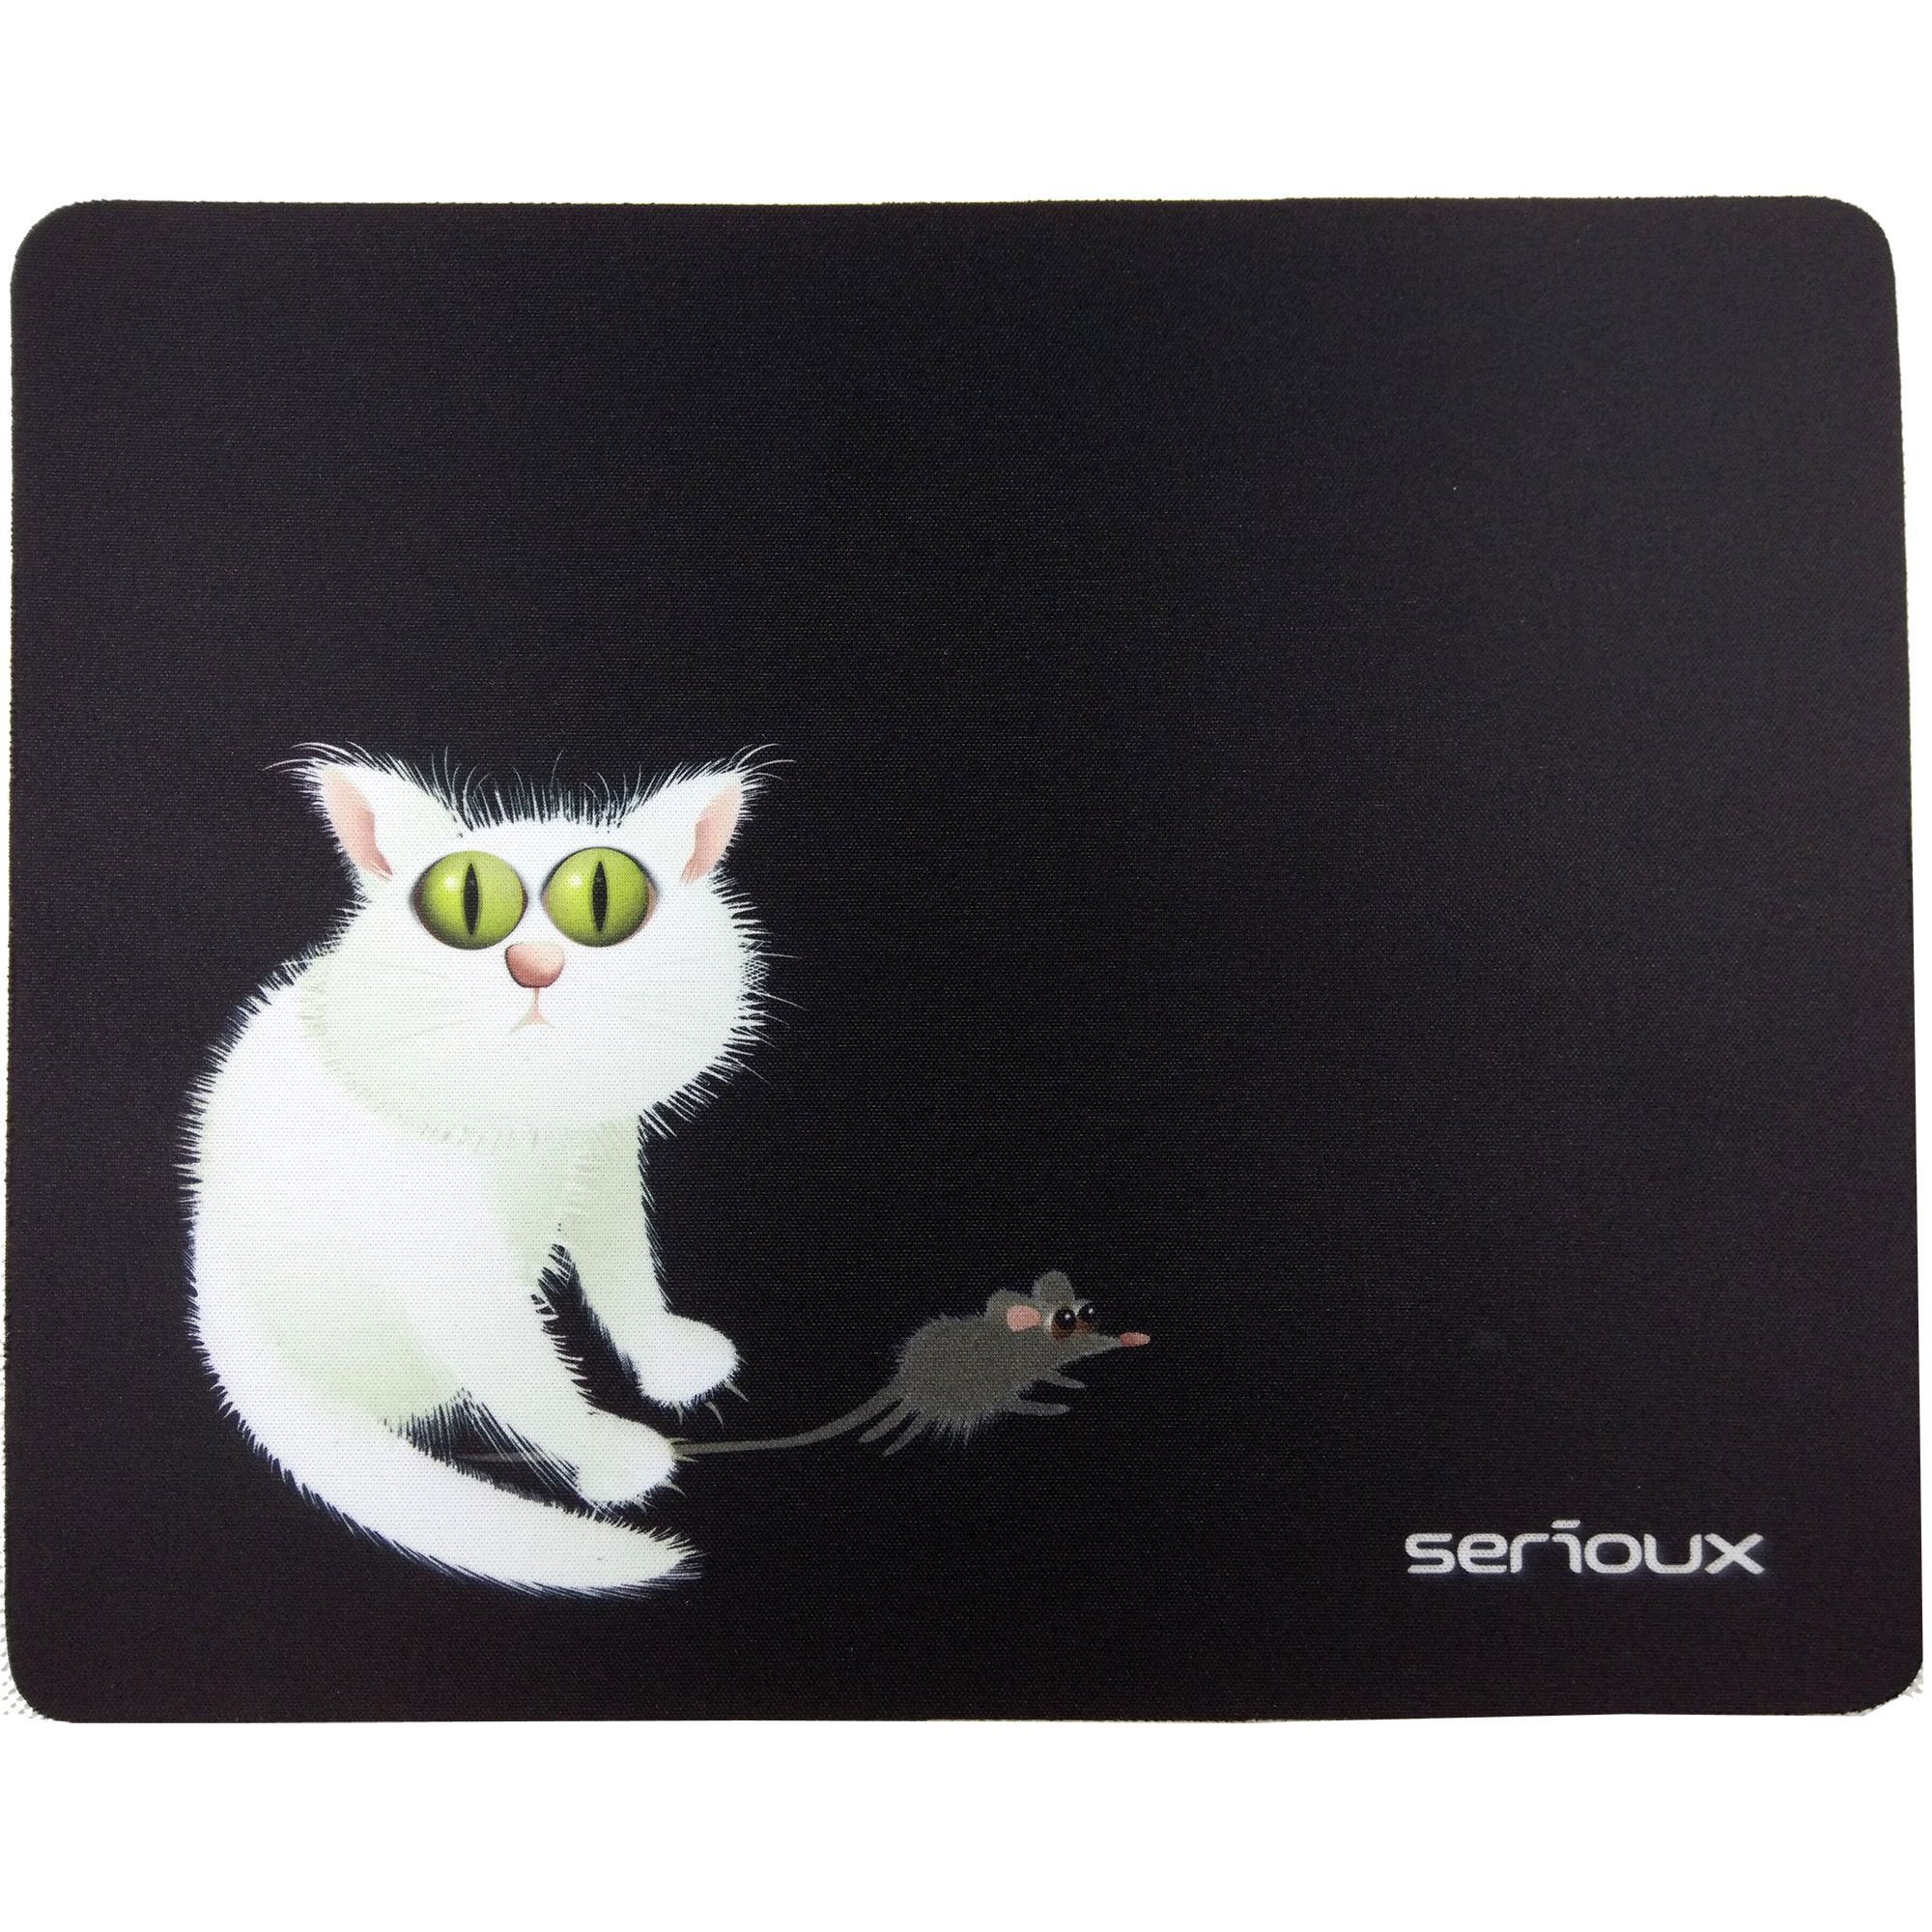 Mouse pad Serioux, model Cat and mice, MSP02, suprafata textila, baza cauciucata, 250*200*3mm_1